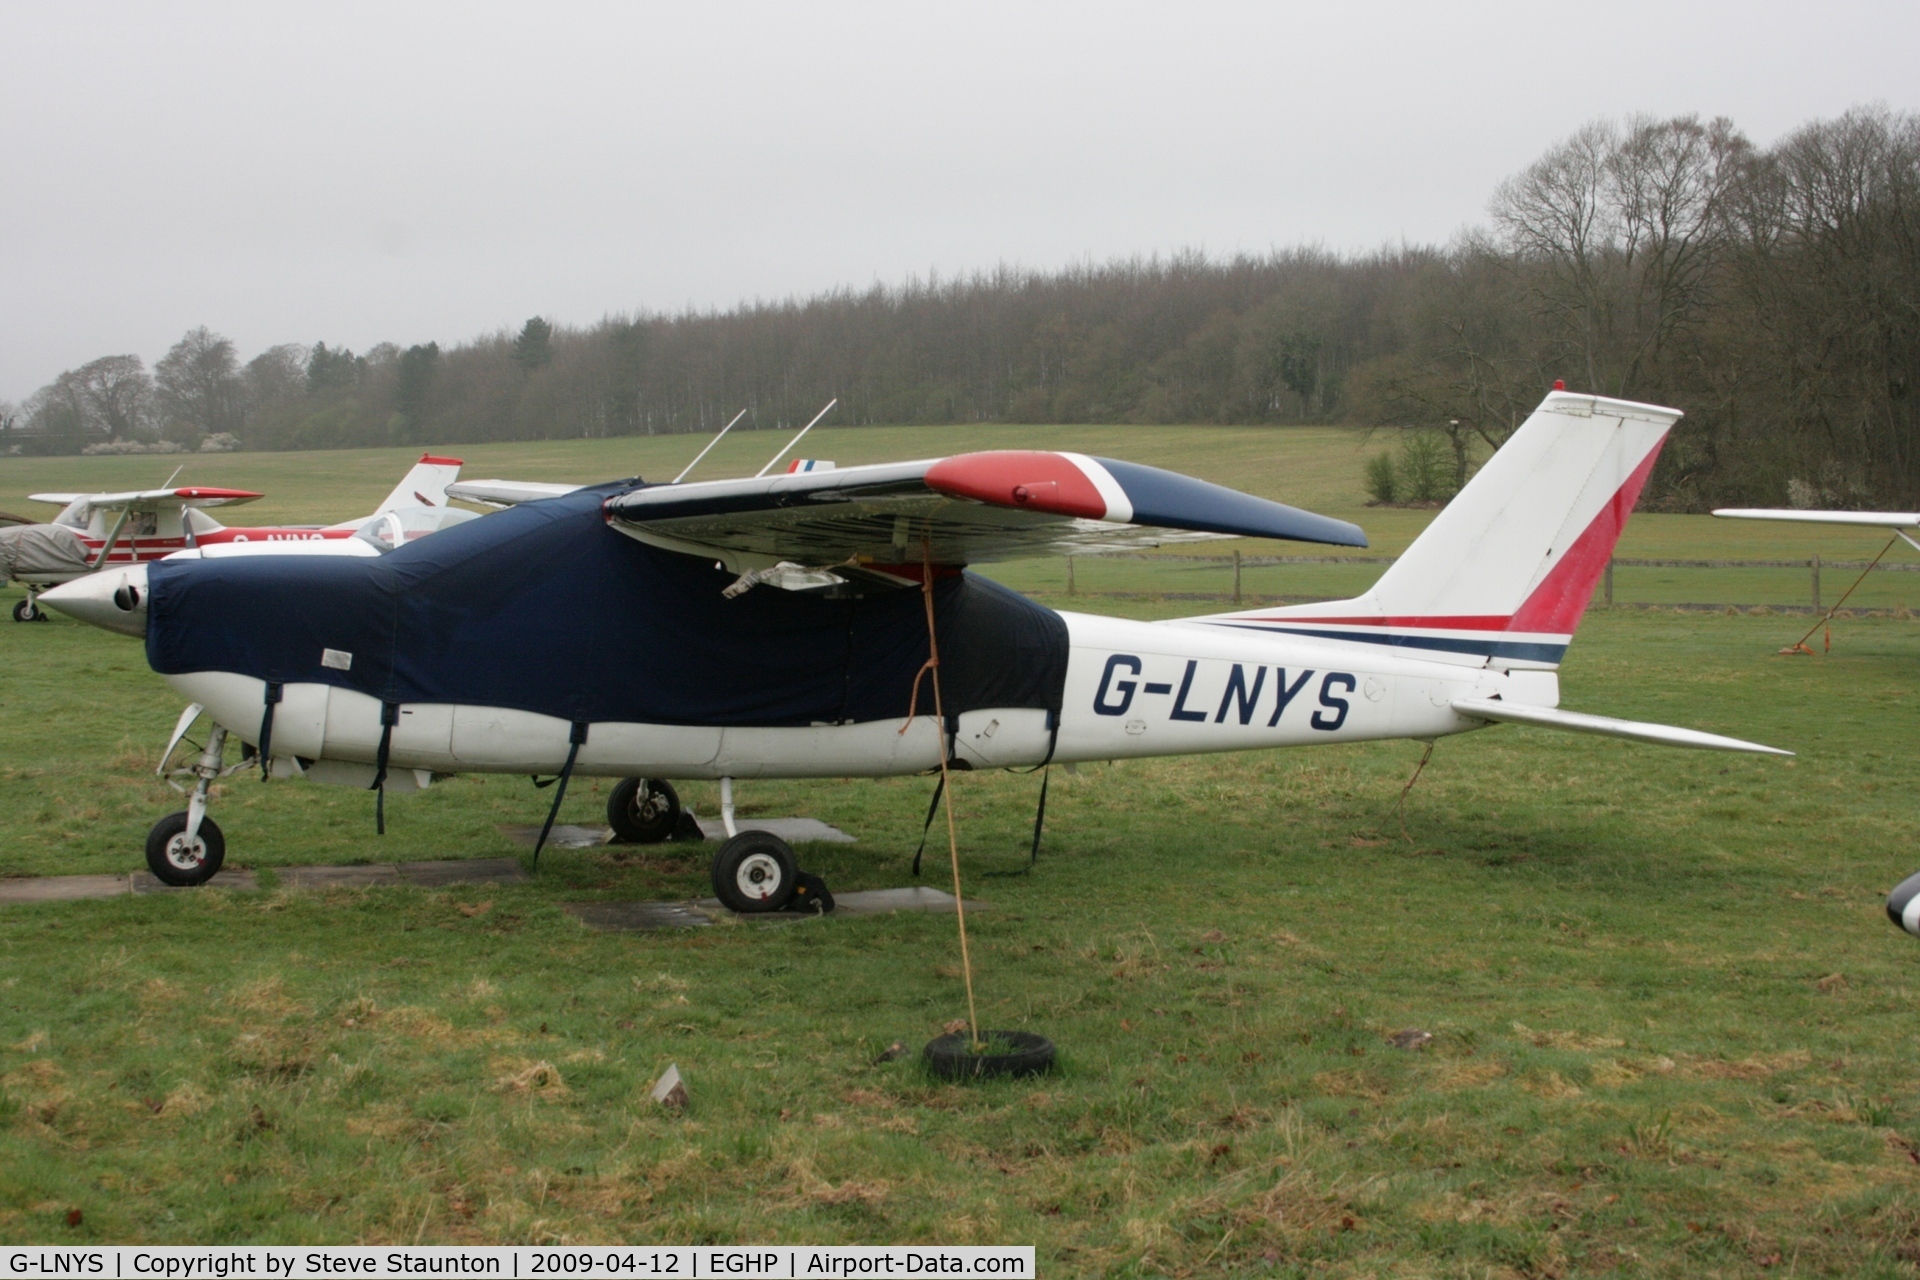 G-LNYS, 1974 Reims F177RG Cardinal RG C/N 0120, Taken at Popham Airfield, England on a gloomy April Sunday (12/04/09)